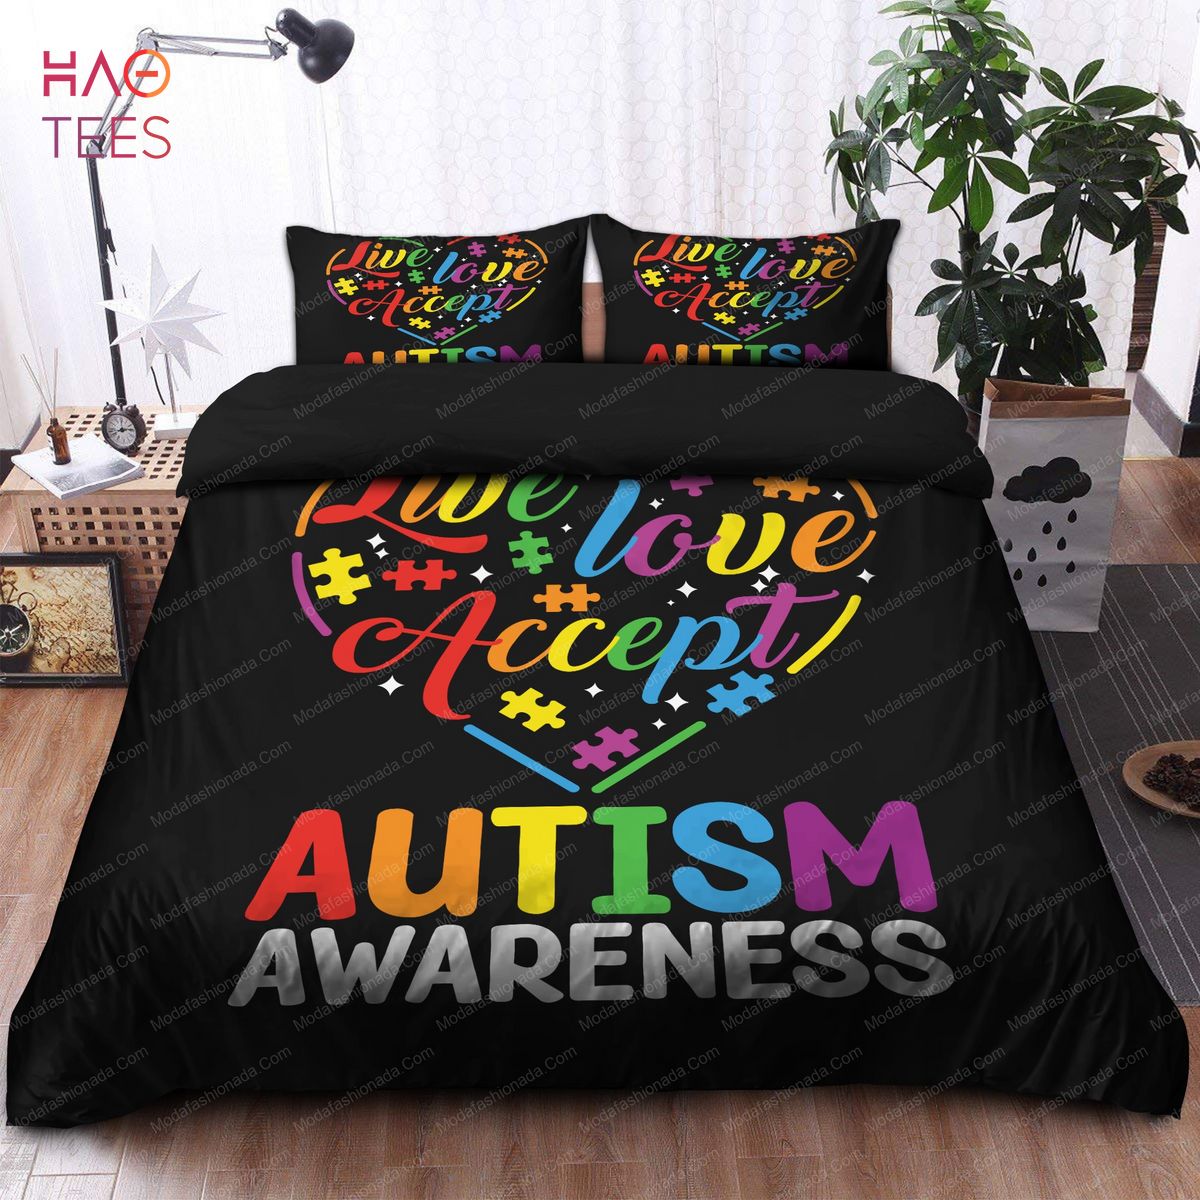 Live Love Accept Autism Awareness Bedding Sets